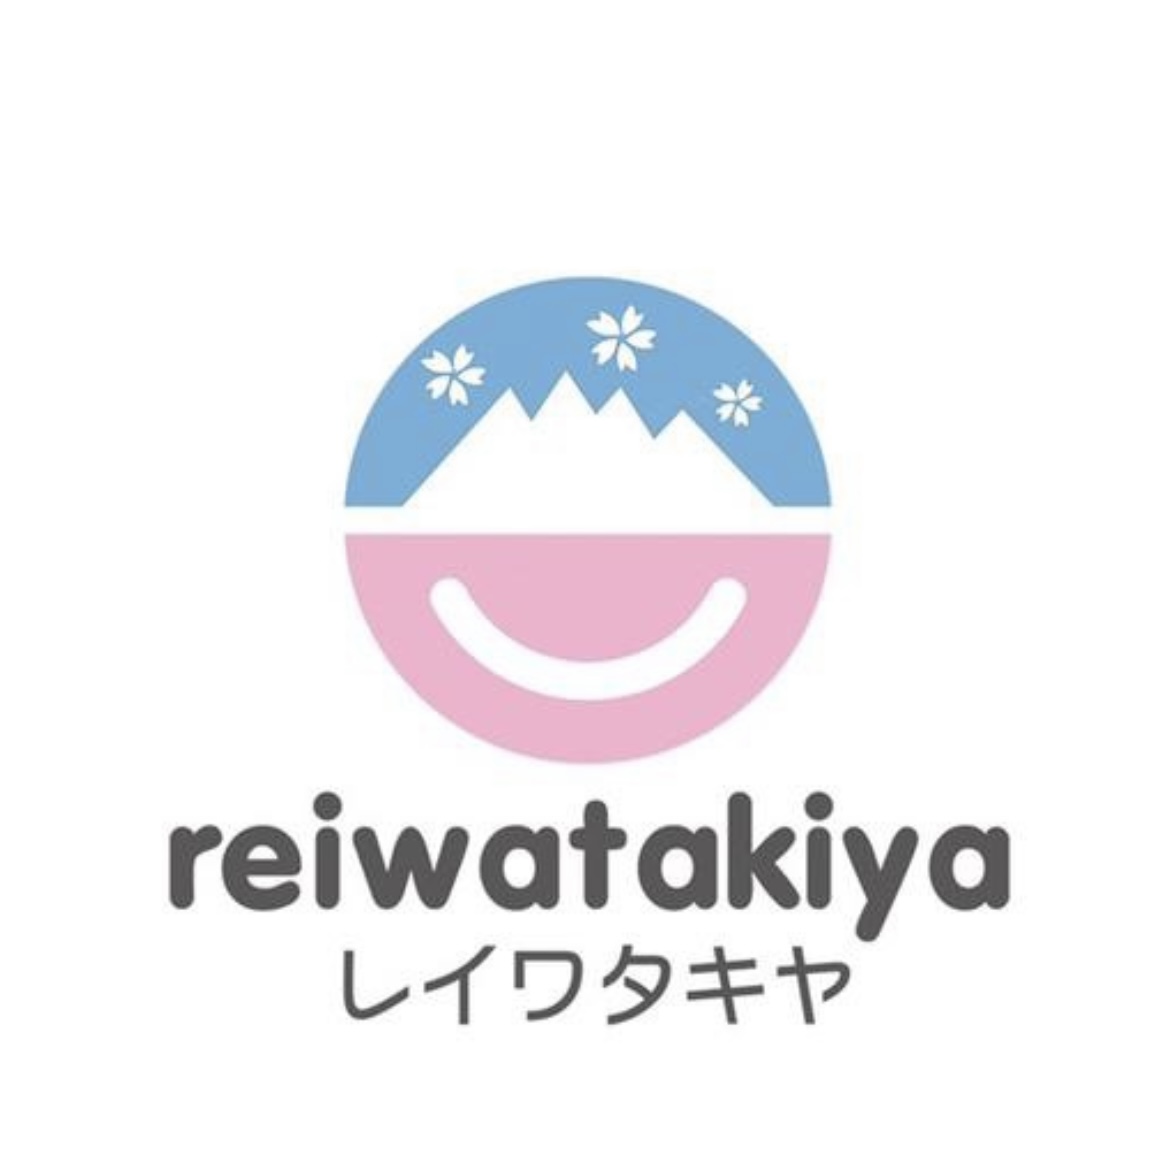 Reiwatakiya - Toronto Logo